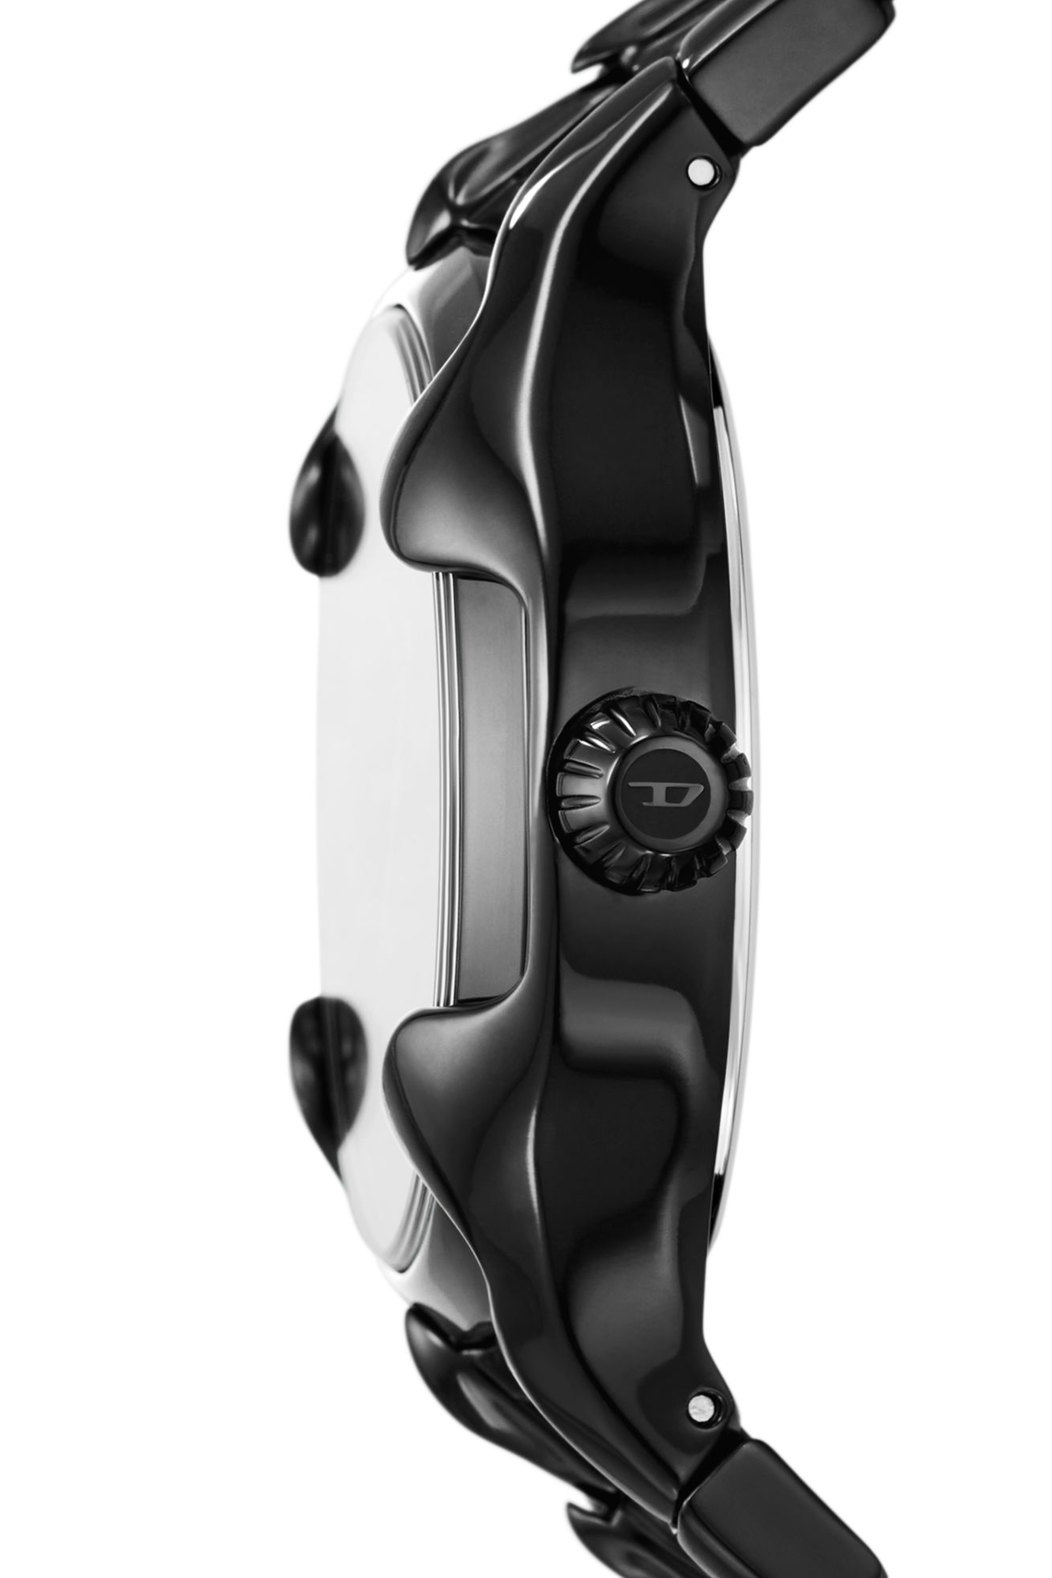 Diesel Vert Three-Hand Date Black Stainless Steel Watch